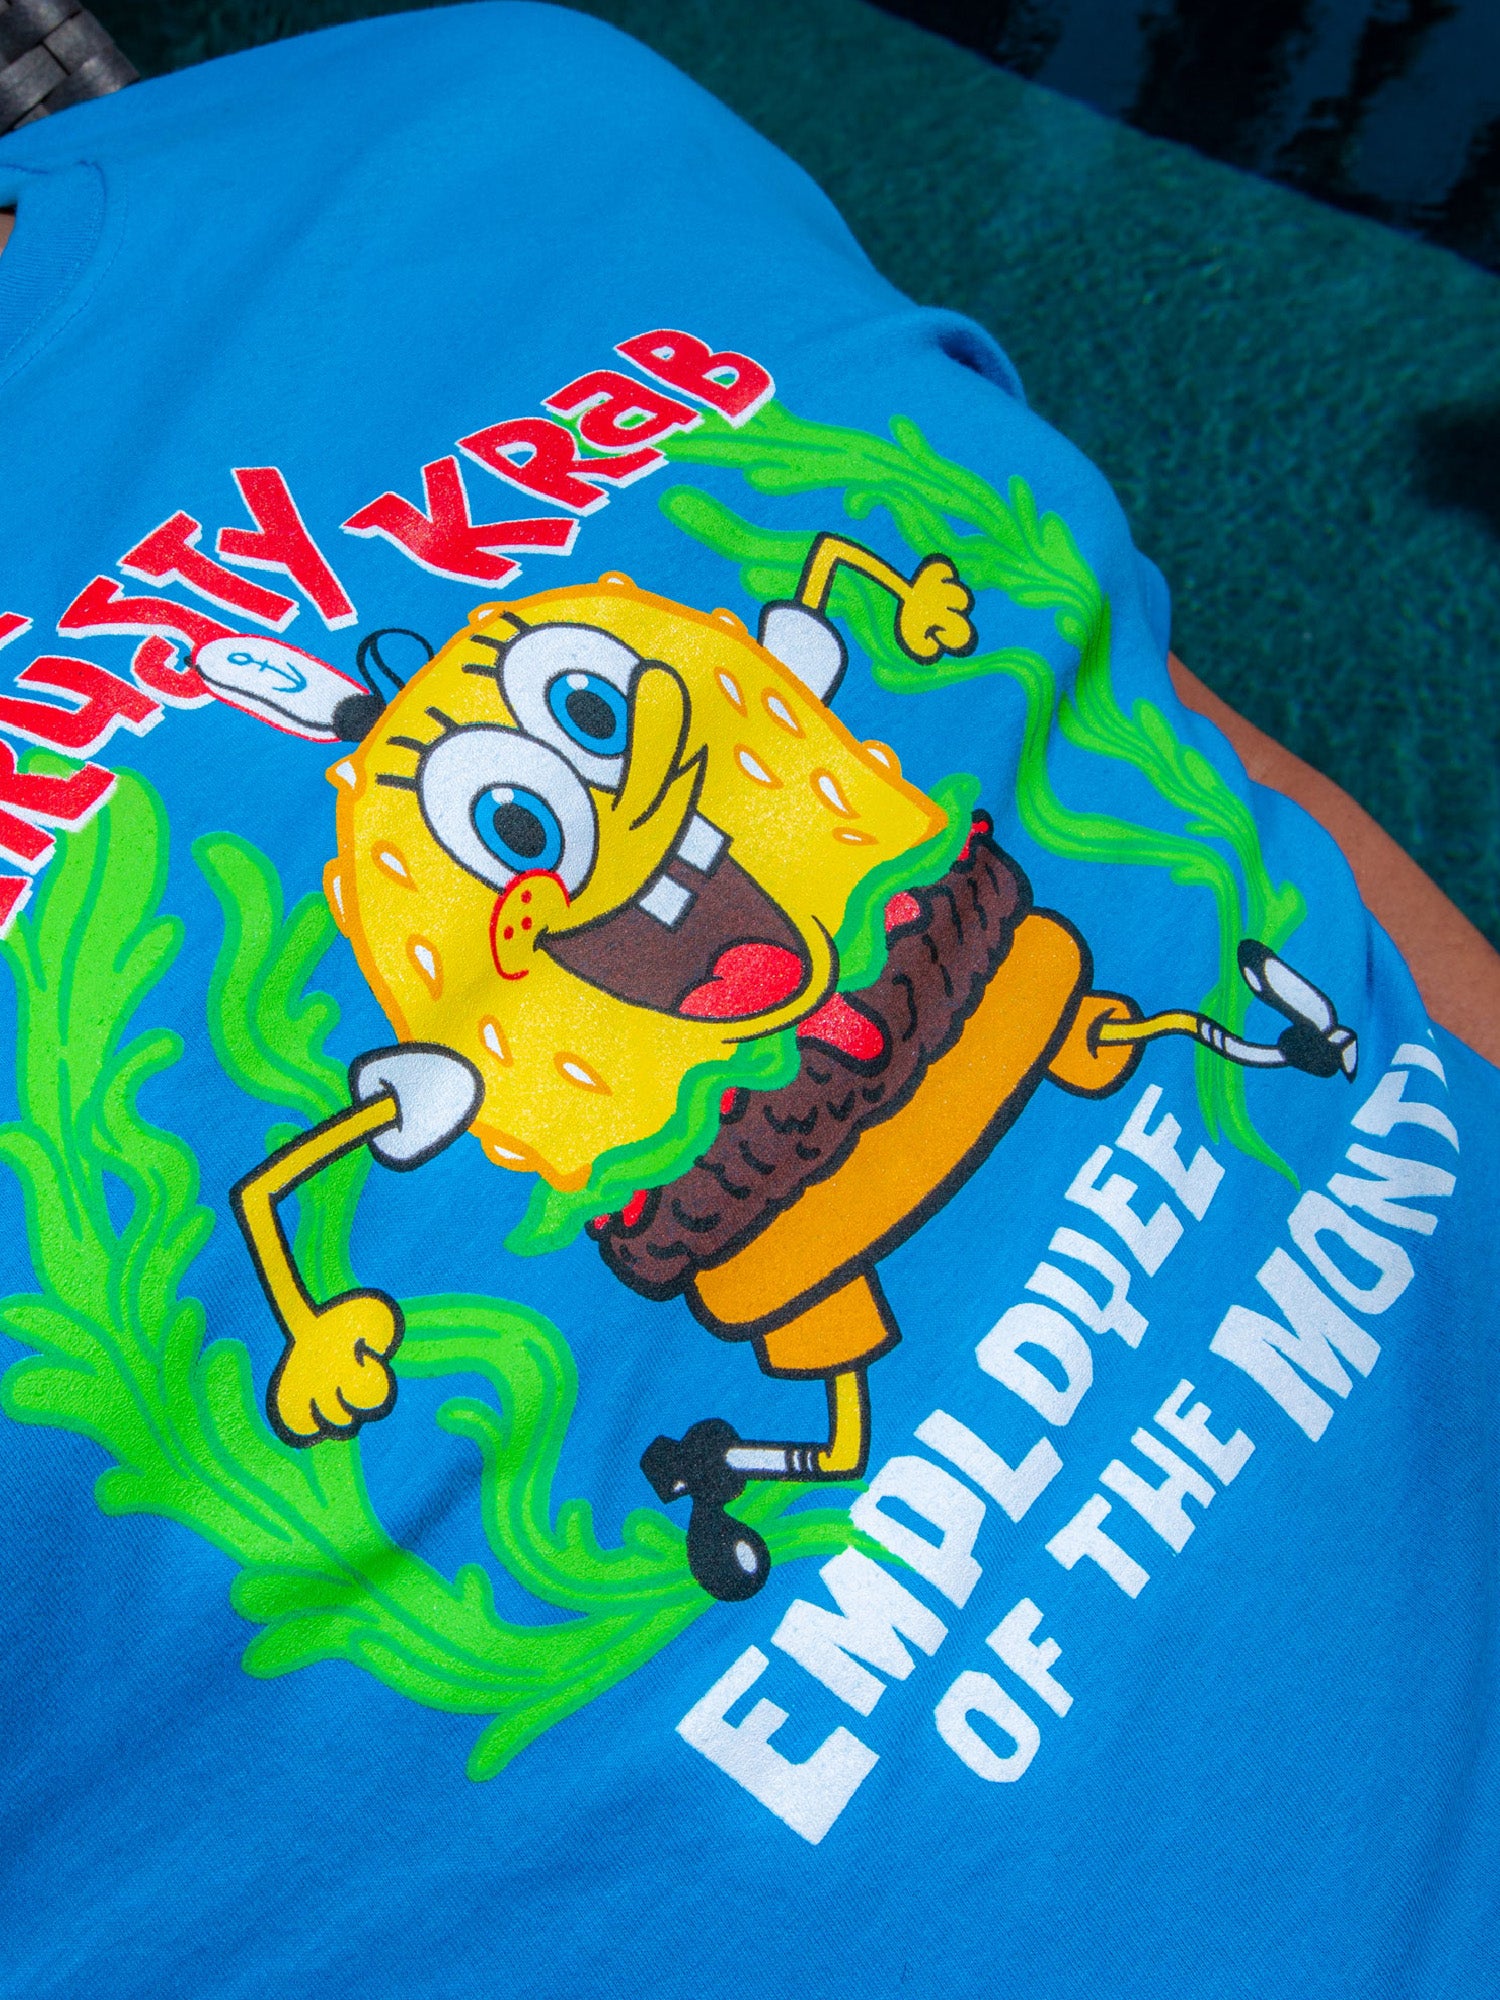 SpongeBob SquarePants "Employee of the Month" T-Shirt - costumes.com